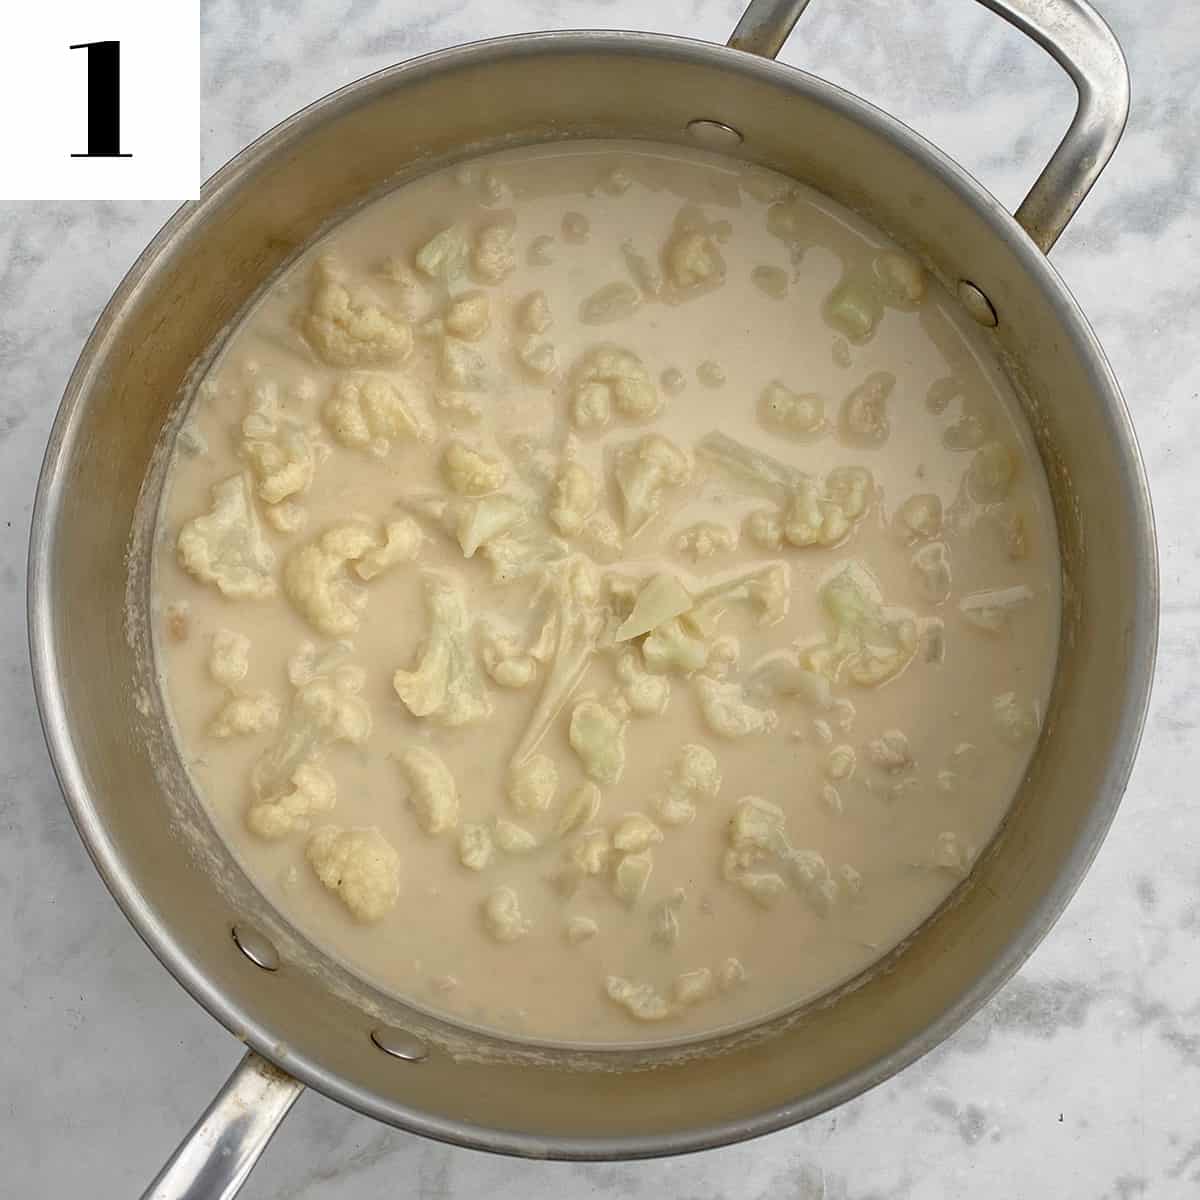 cauliflower cooking in large pan.